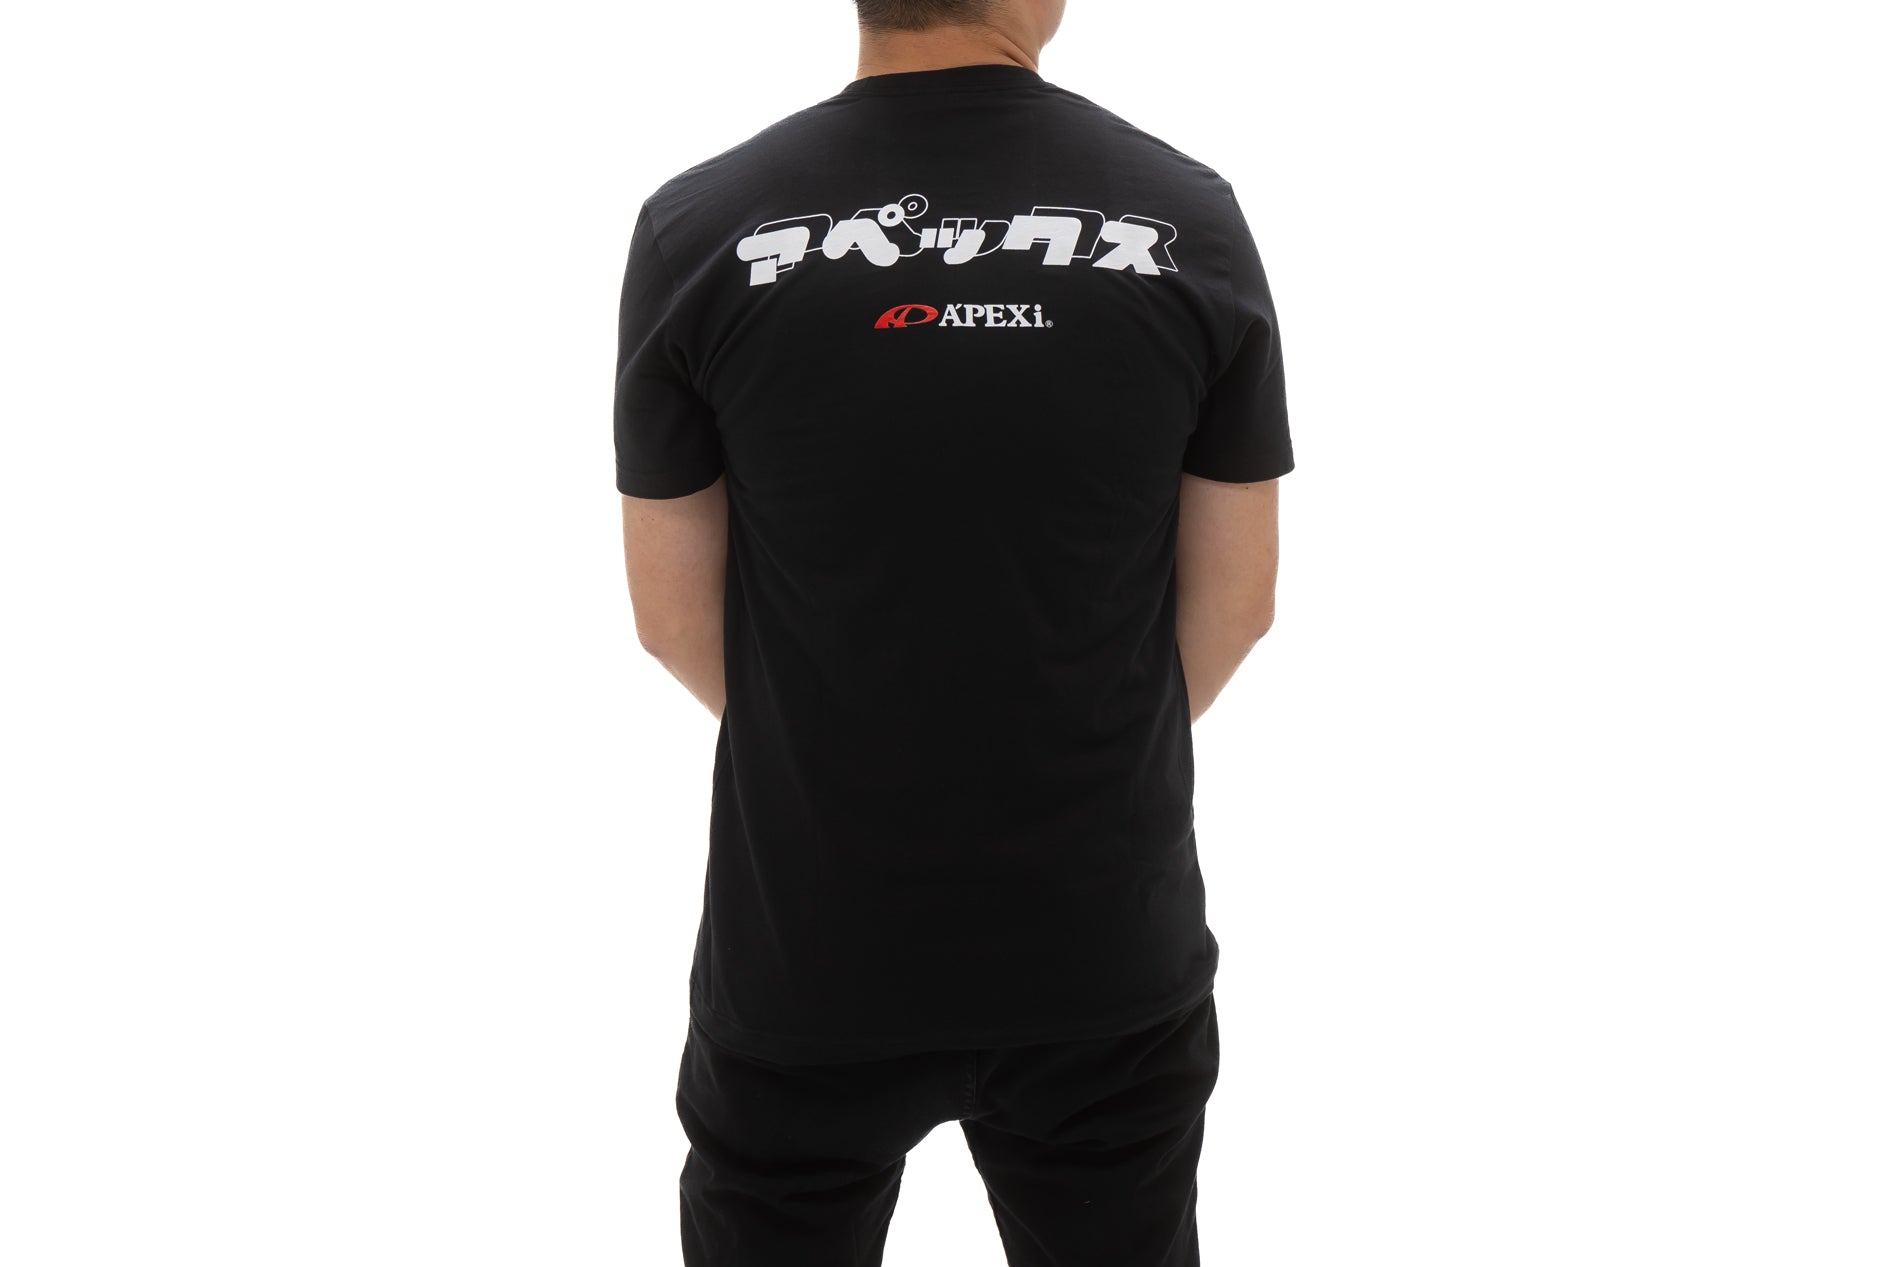 A'PEXi - A'PEXi Japanese (Katakana) T-Shirt